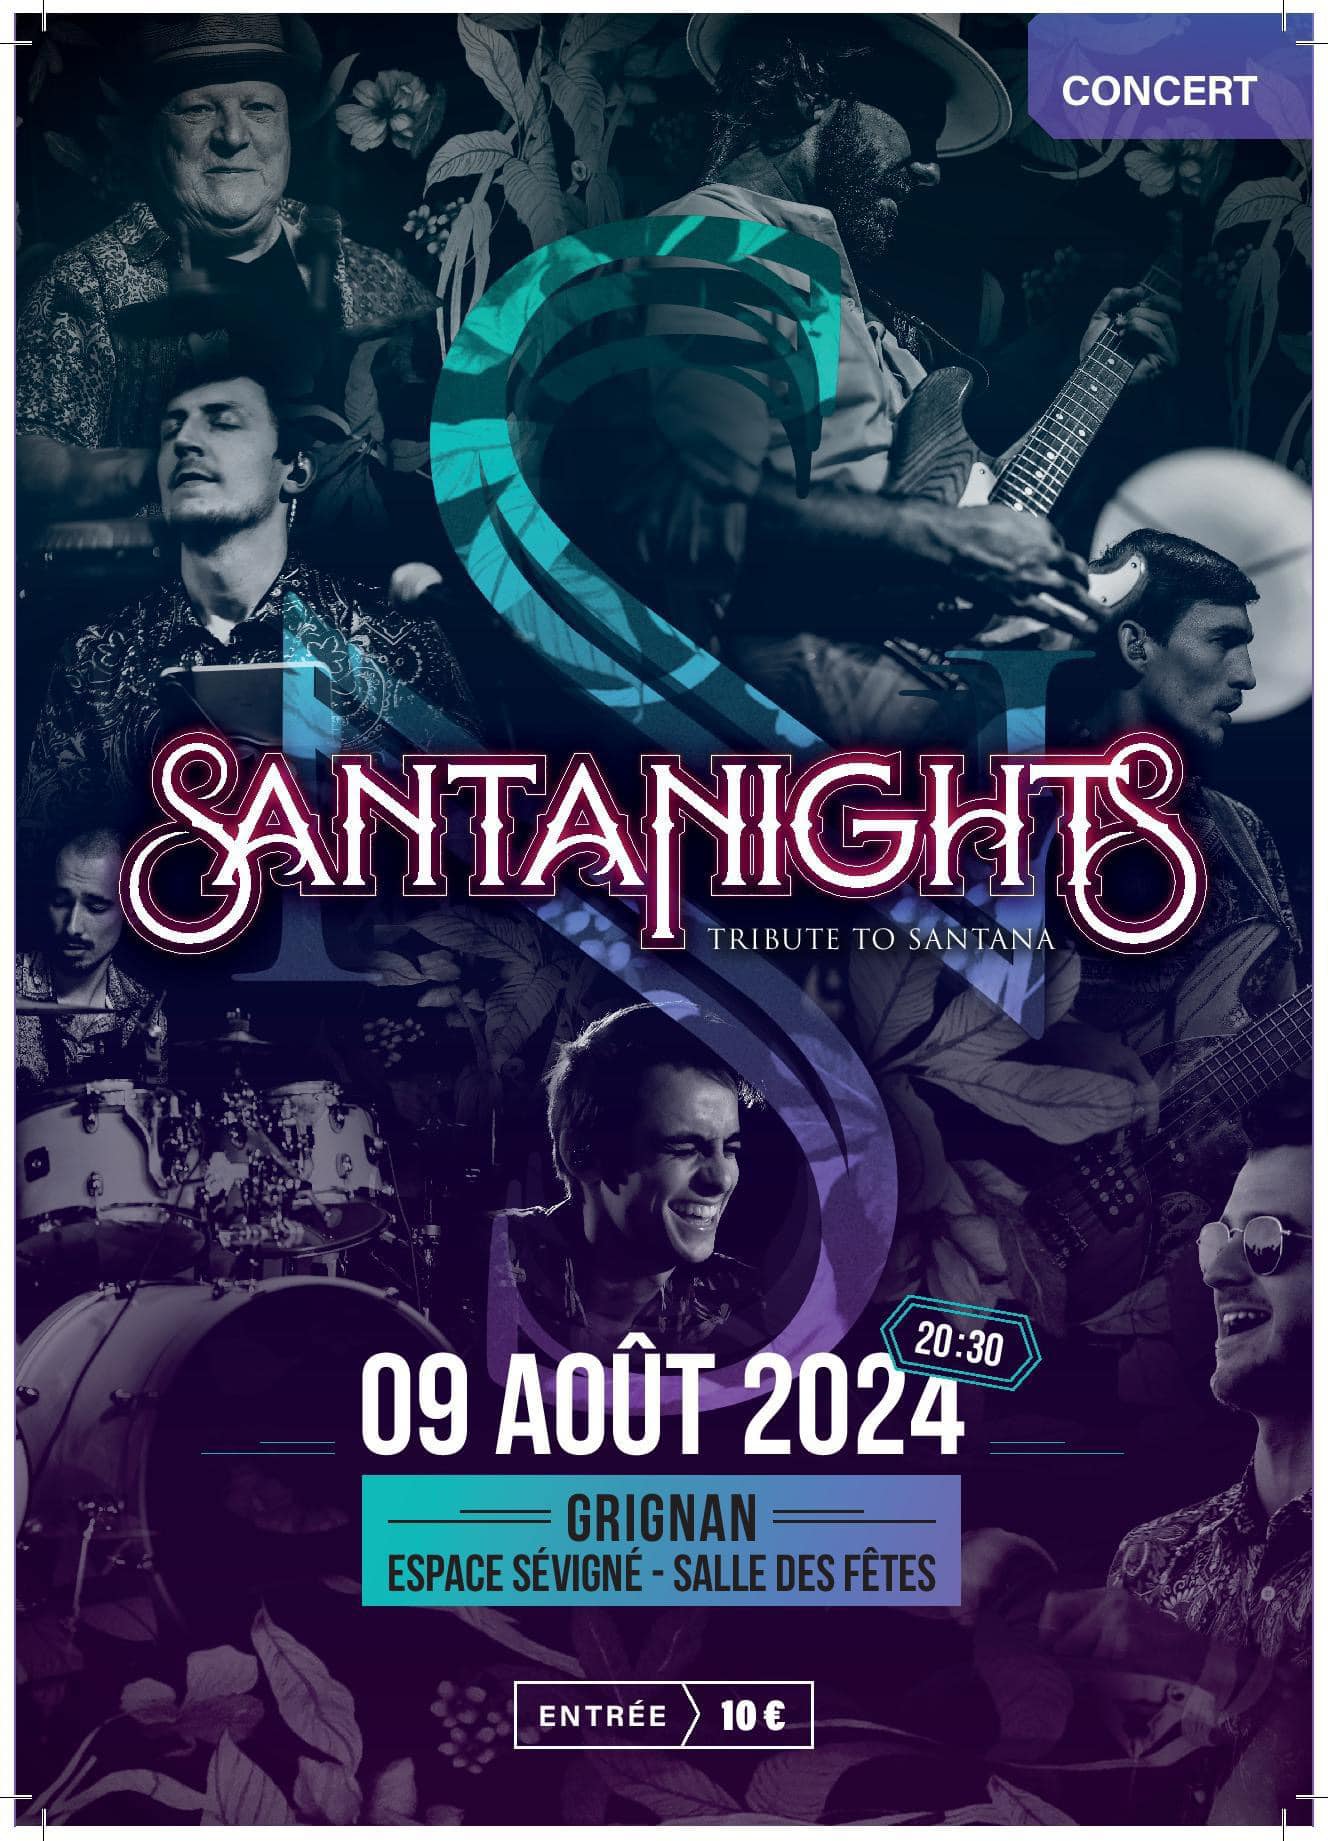 Concert Santanights - tribute to Carlos Santana